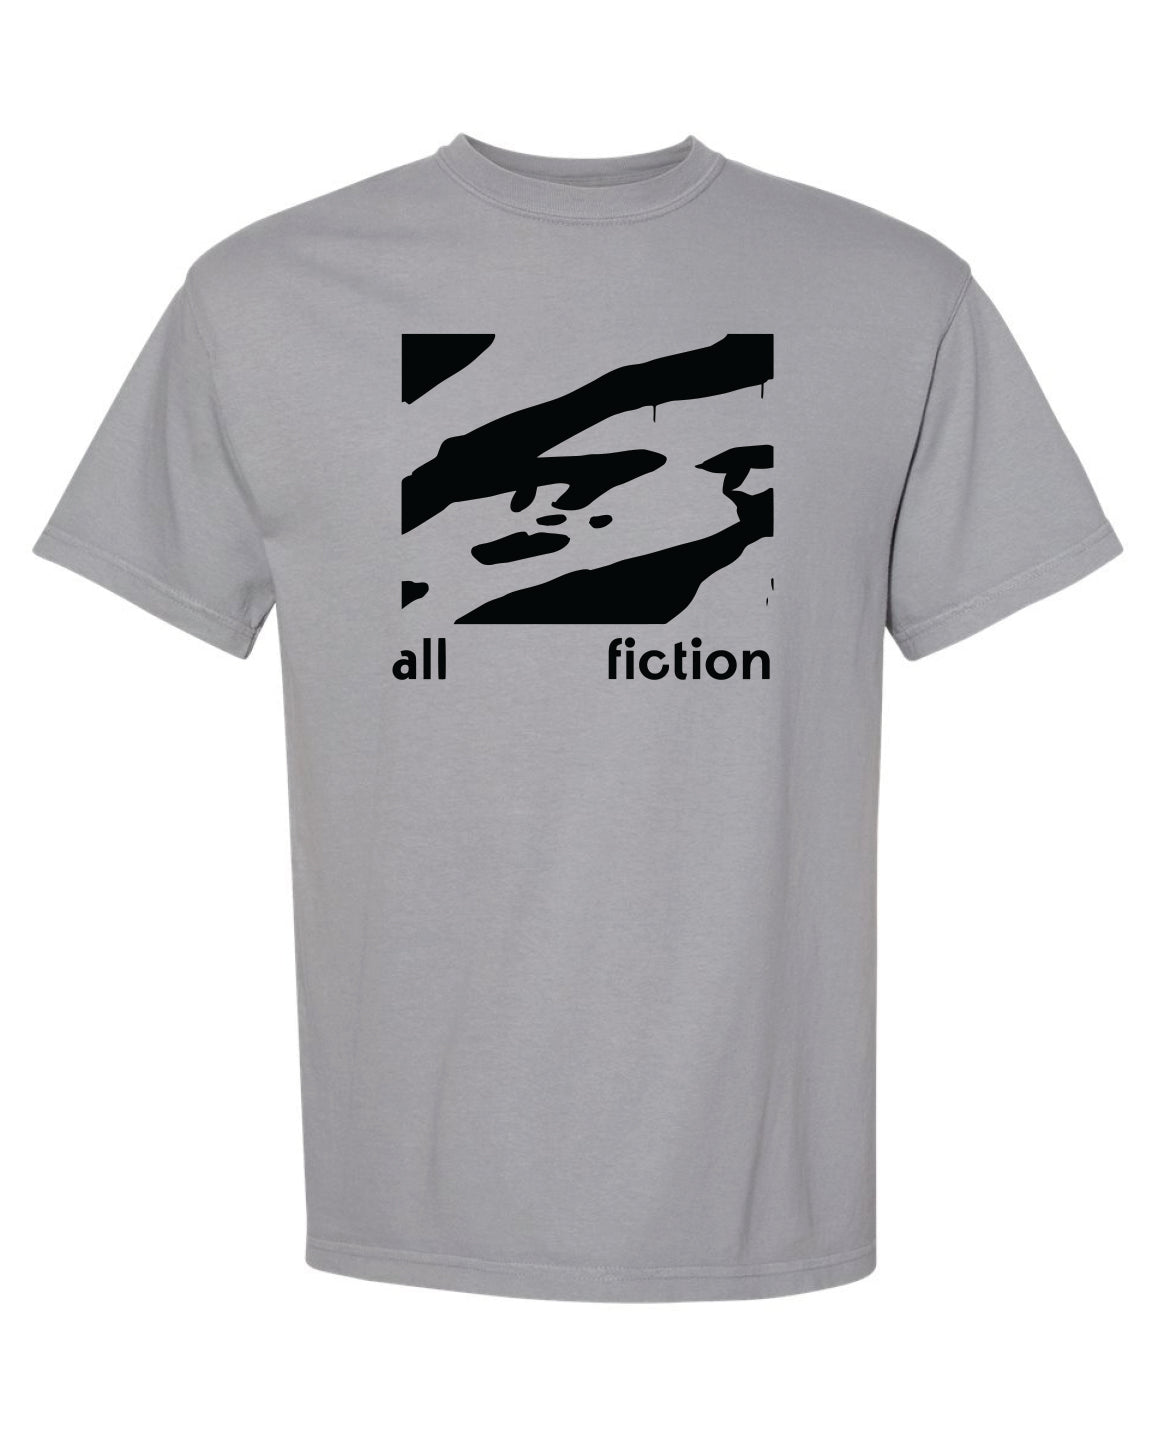 All Fiction - T-shirt (granite)